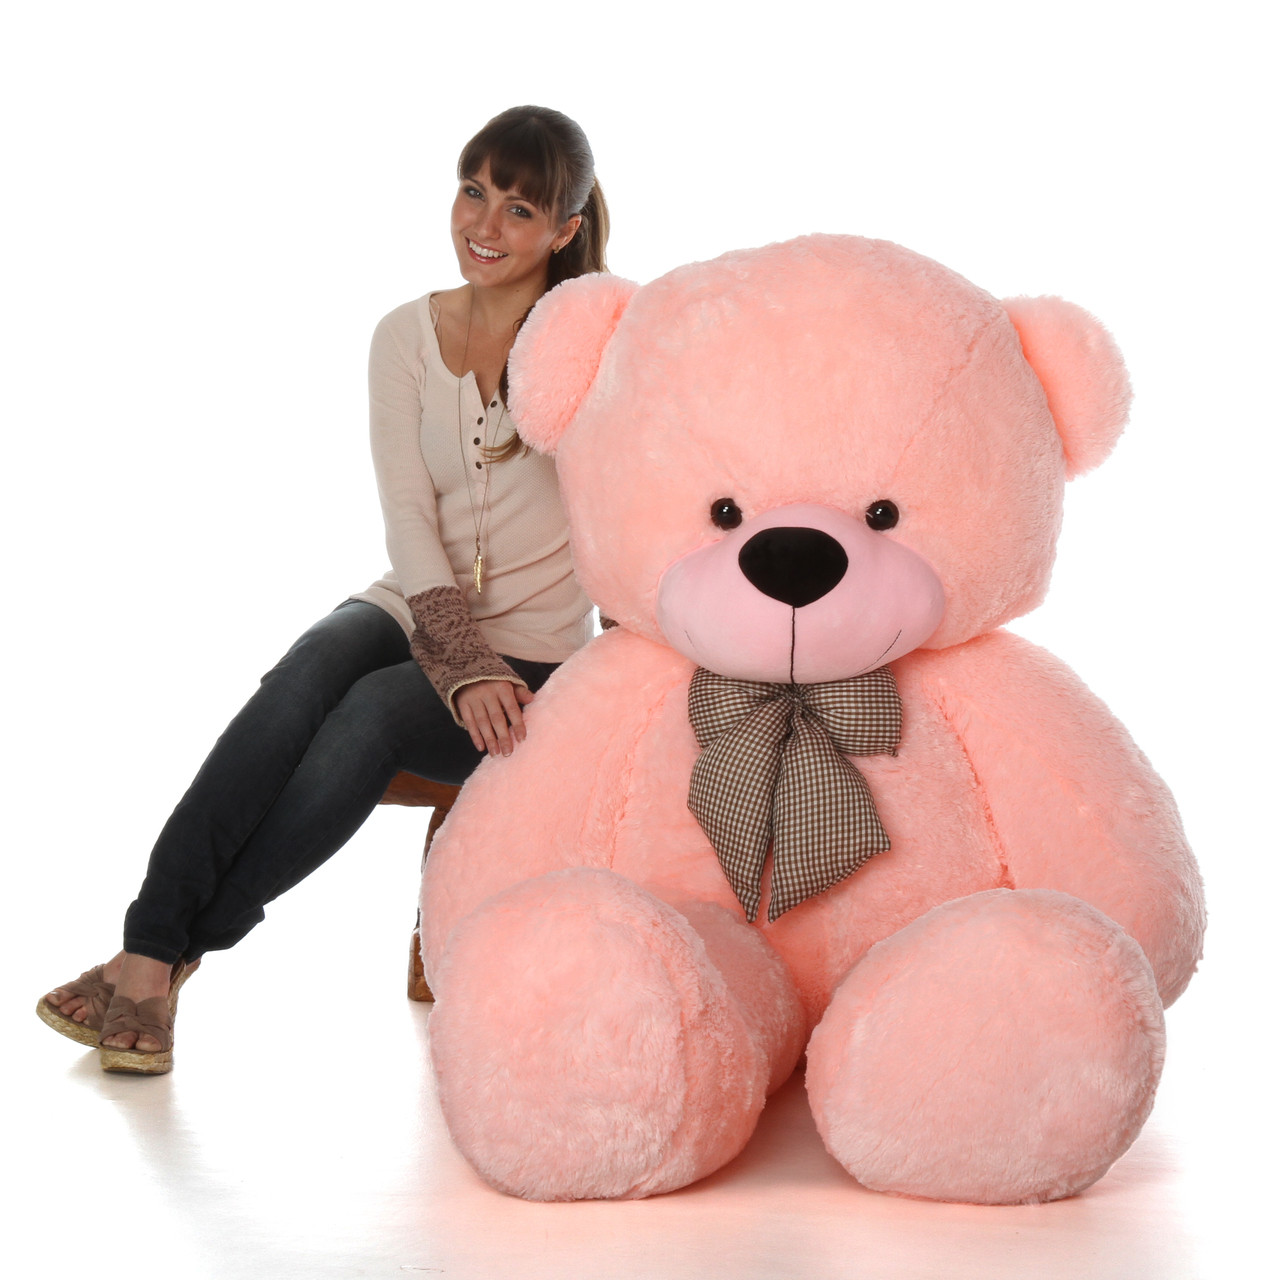 6ft pink teddy bear